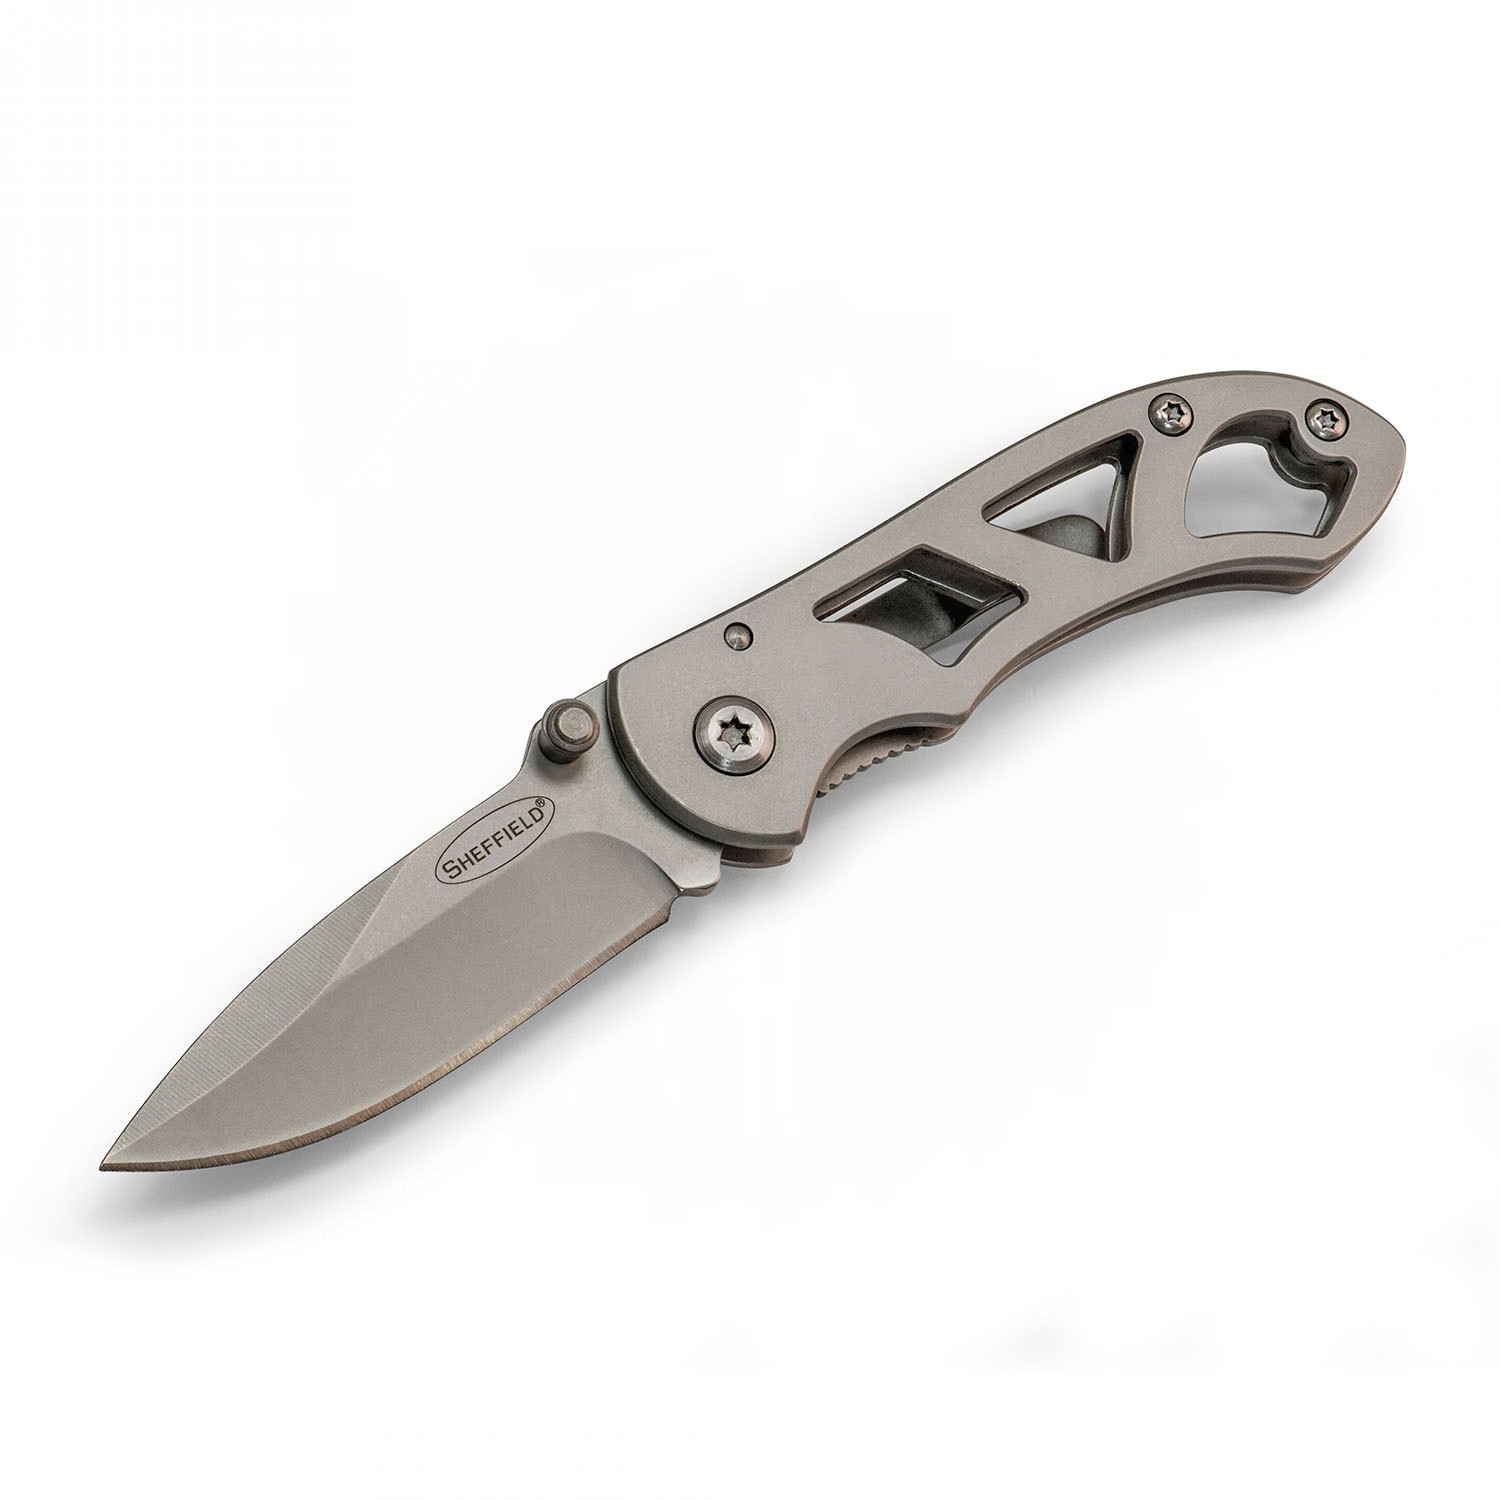 https://op2.0ps.us/original/opplanet-sheffield-3-inch-folding-pocket-knife-silver-12931-main